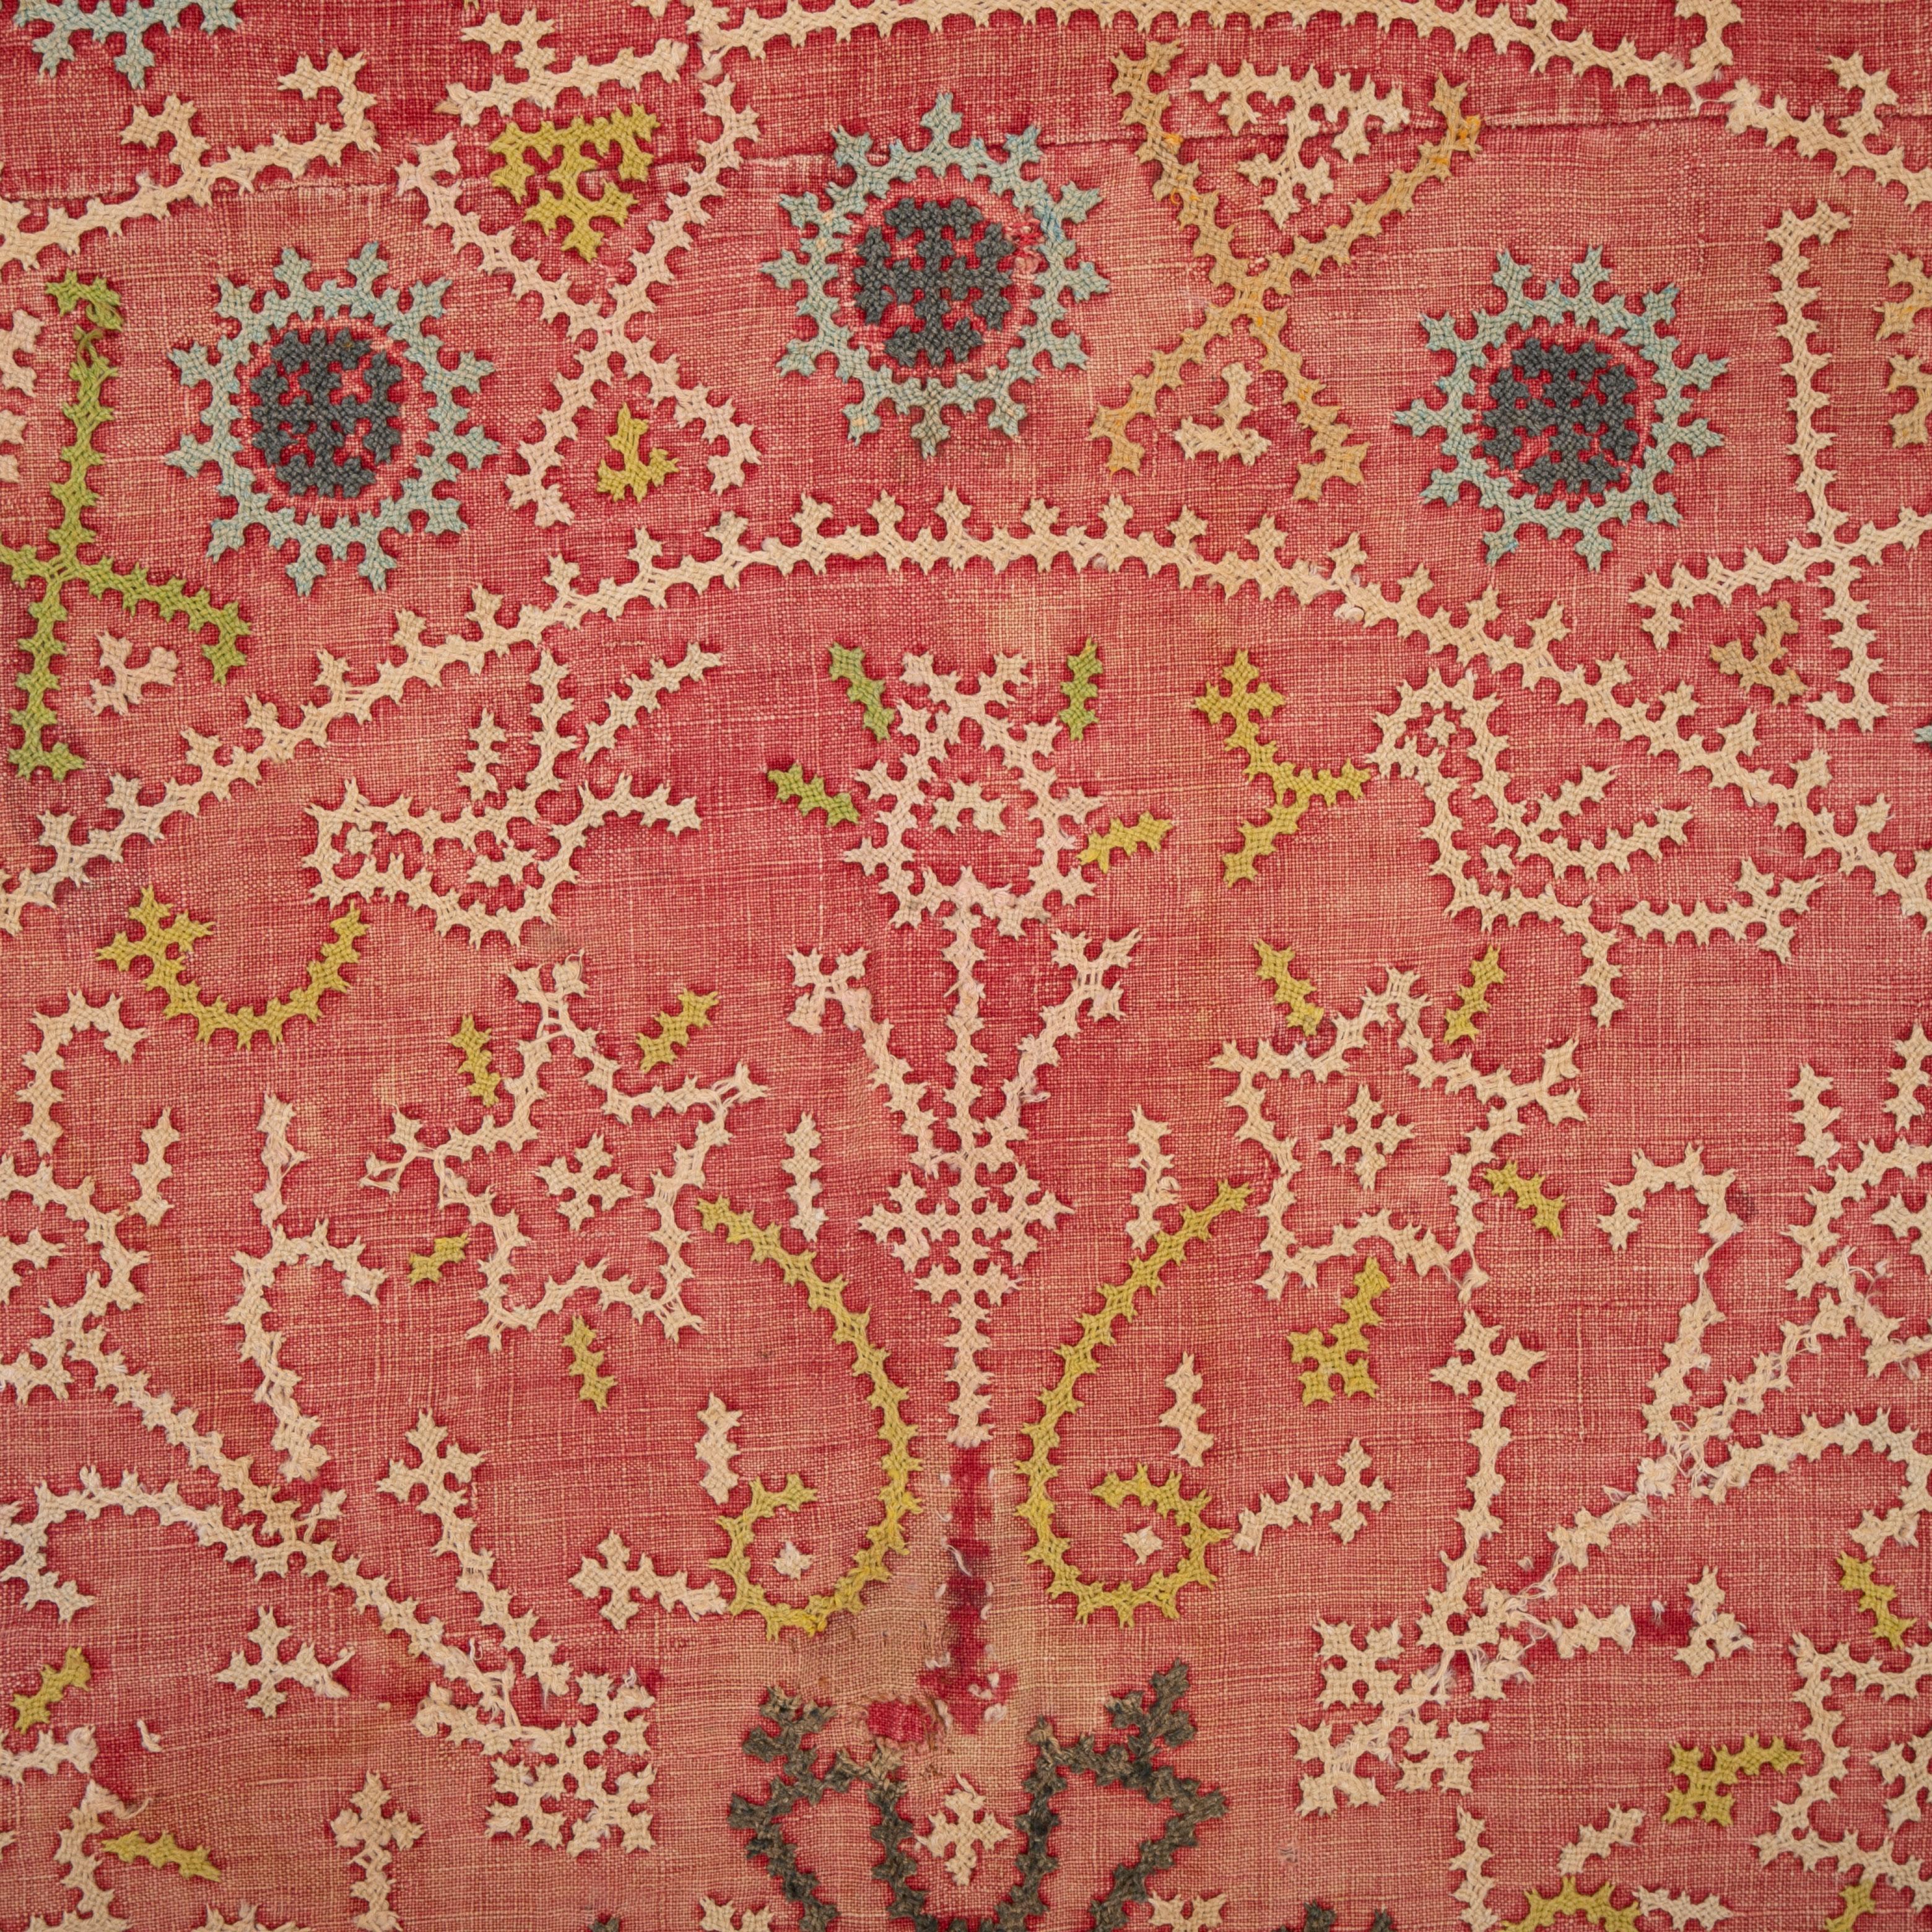 Embroidered Armenian Marash Embroidery, Late 19th Century